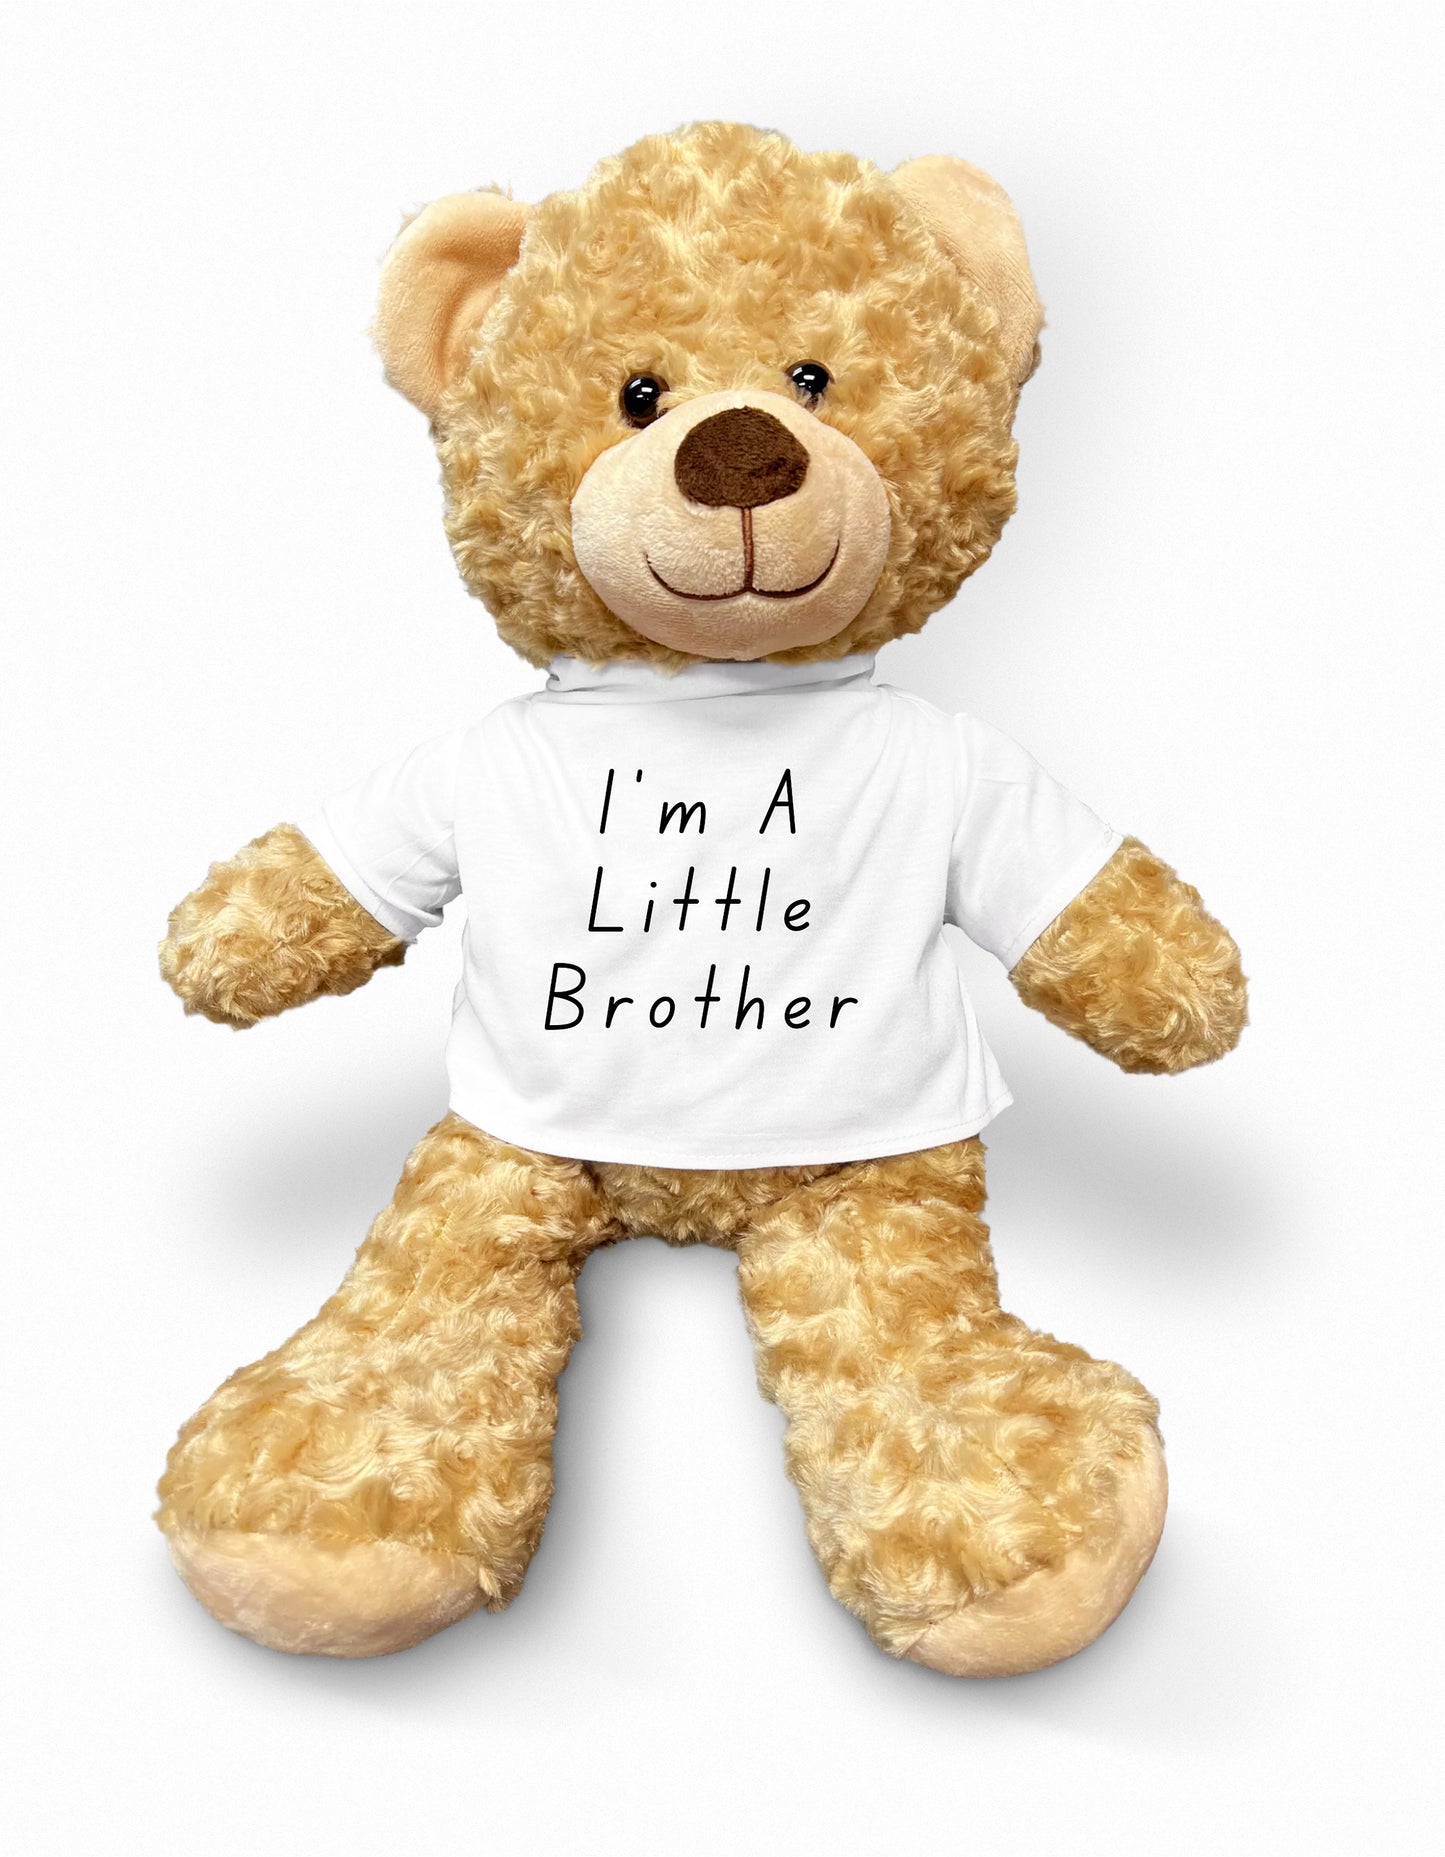 Sibling Teddy Bears, Little Sister, Big Sister, Little Brother, Big Brother, Customize Teddy Bears, Gift for Daughter, Gift for Son